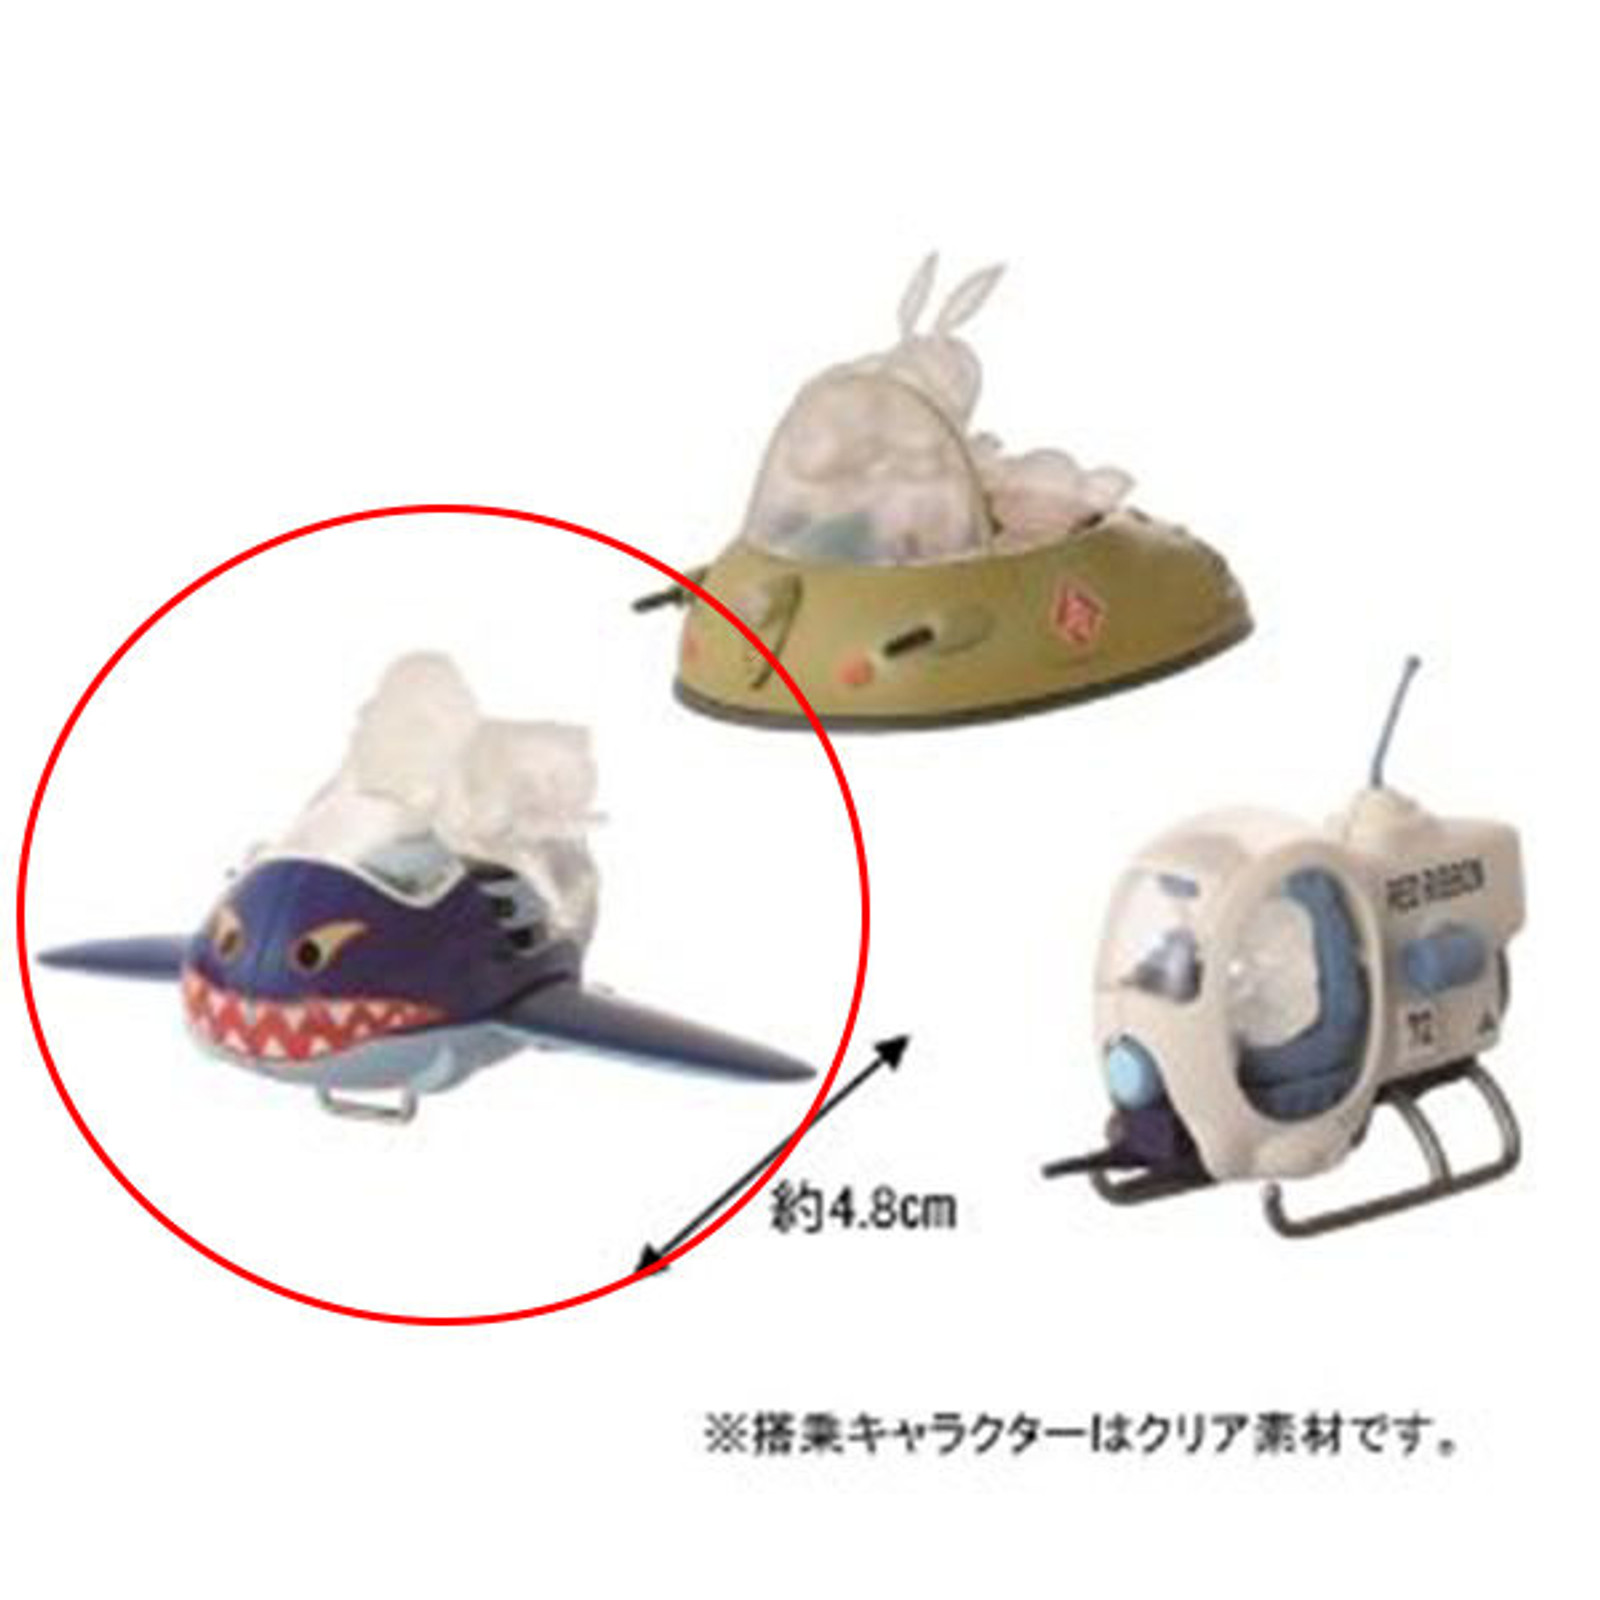 Dragon Ball Z Ichiban Kuji Select Machines Figure AIR Ver. Banpresto JAPAN ANIME